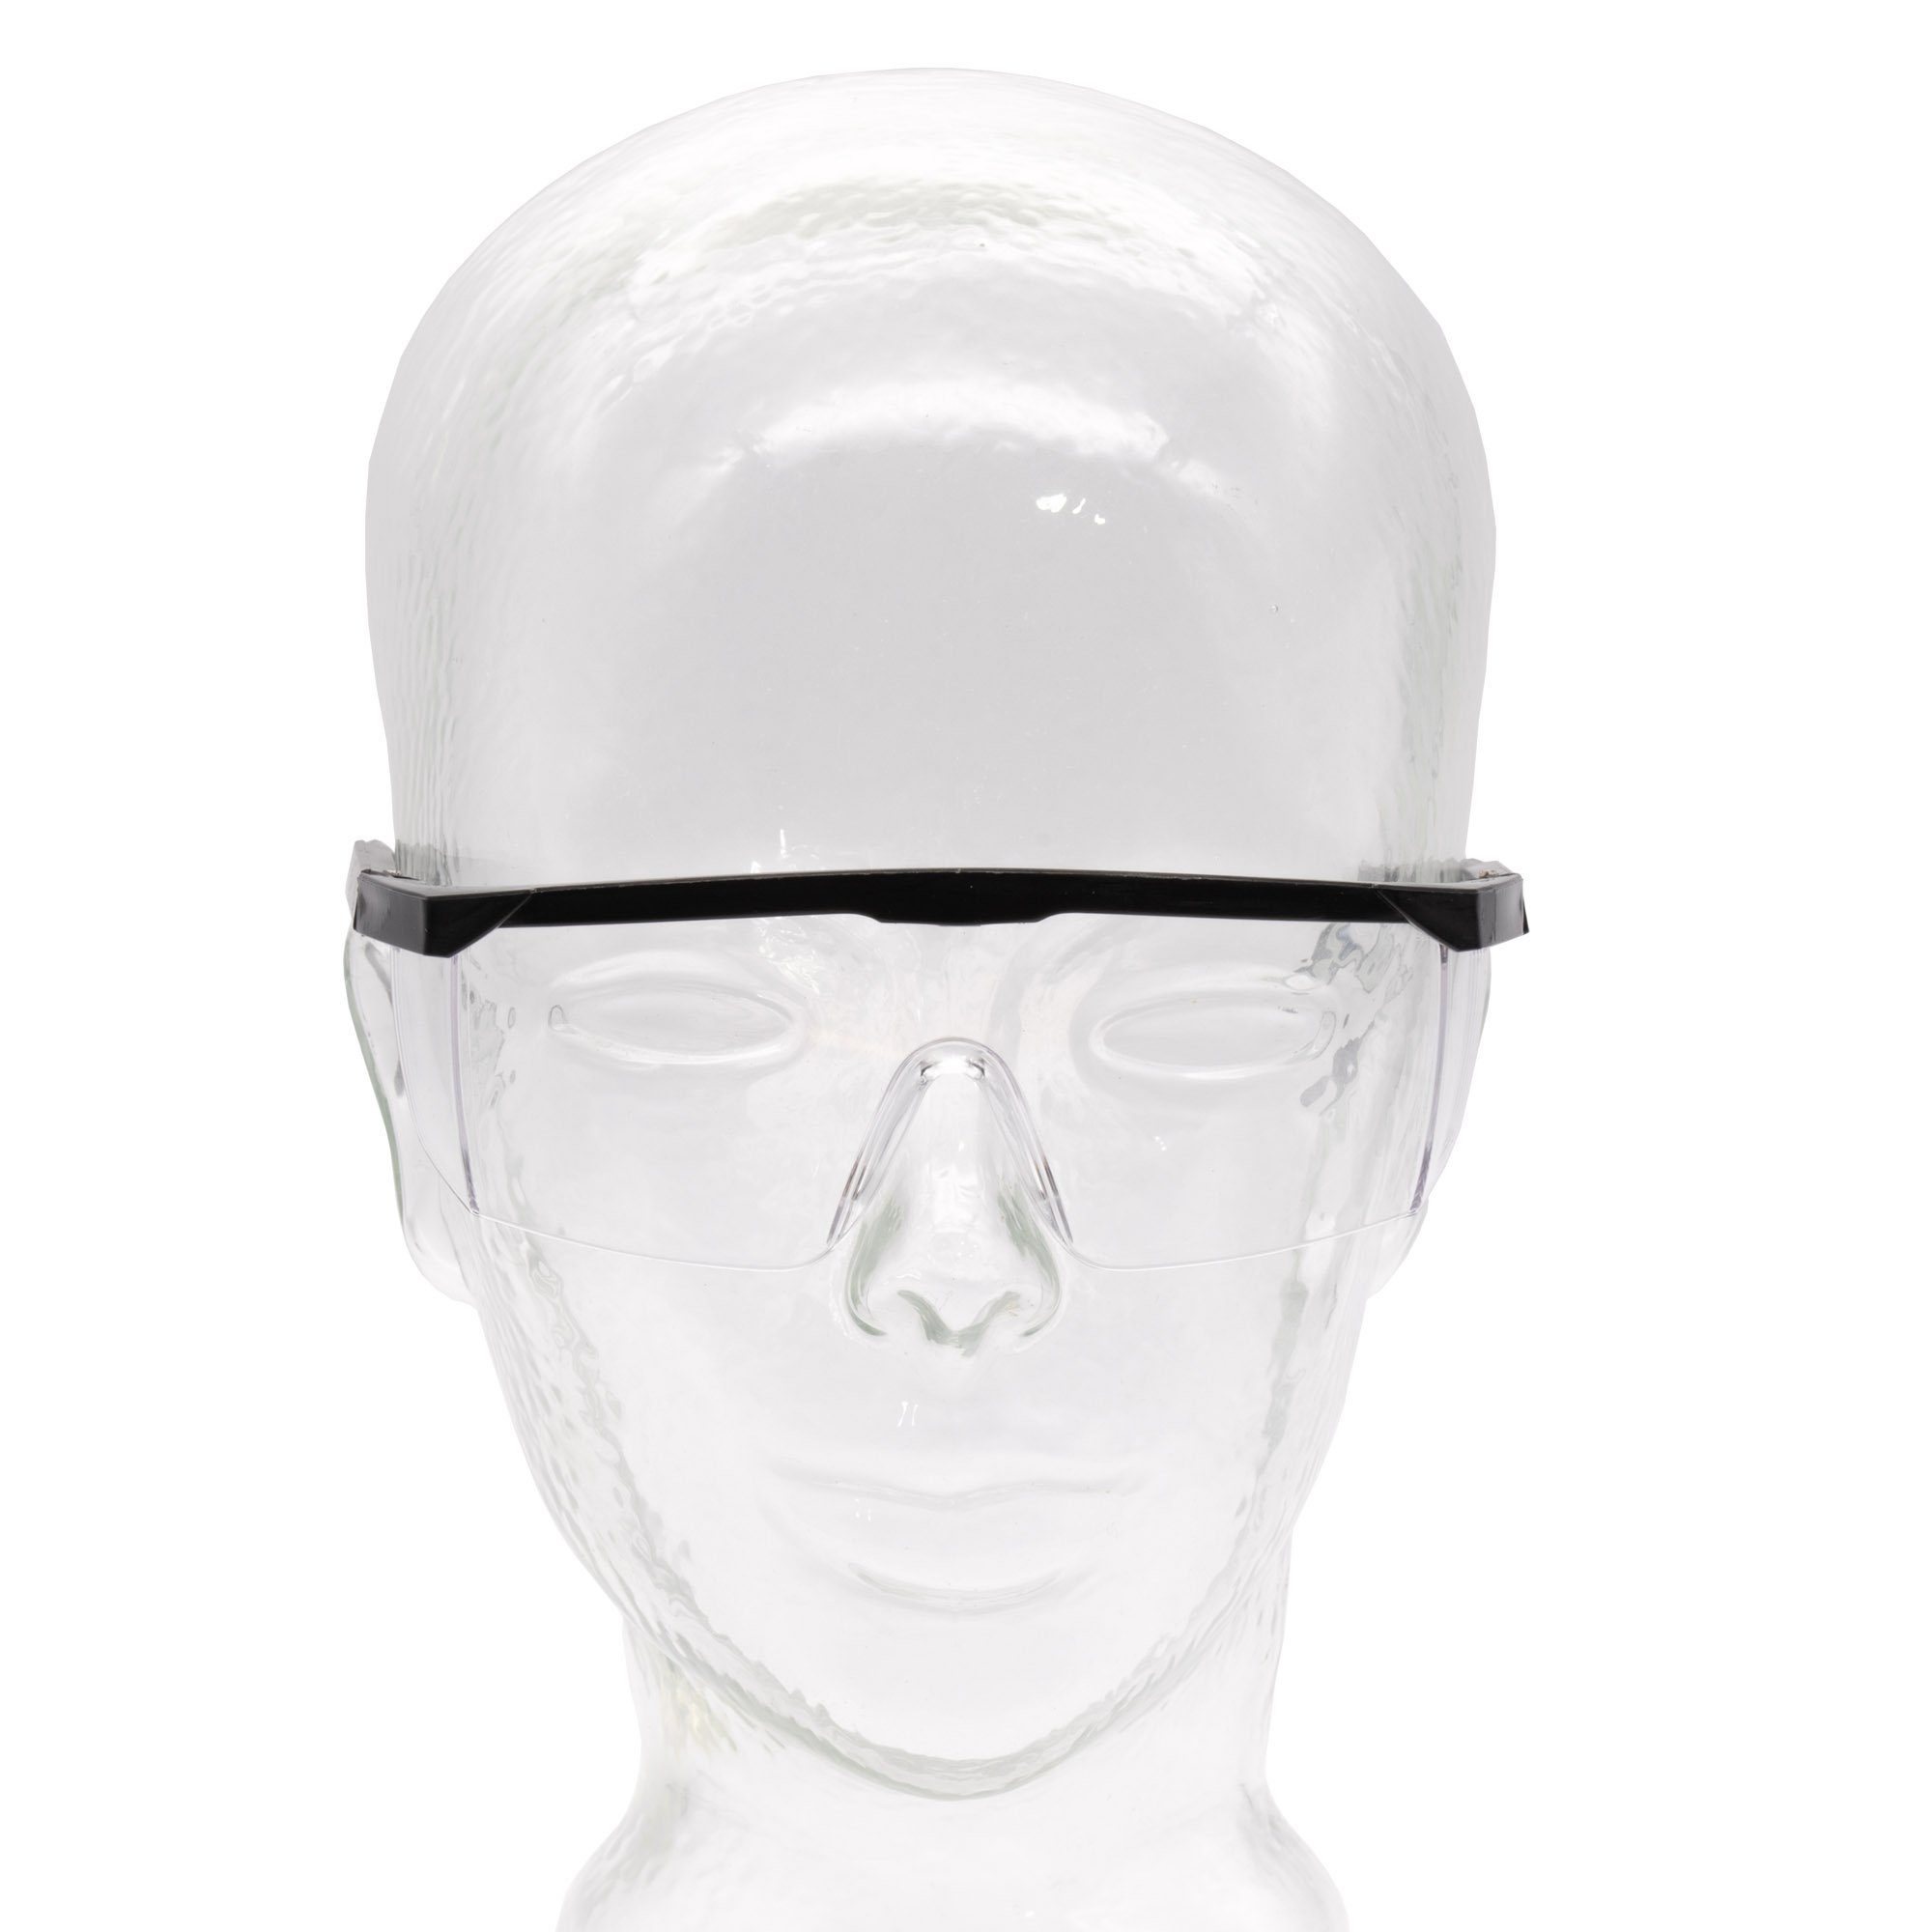 Top, Schutzbrille Augenschutz conkor Sicherheitsbrille Arbeitsbrille Arbeitsschutzbrille Arbeitsschutzbrille,